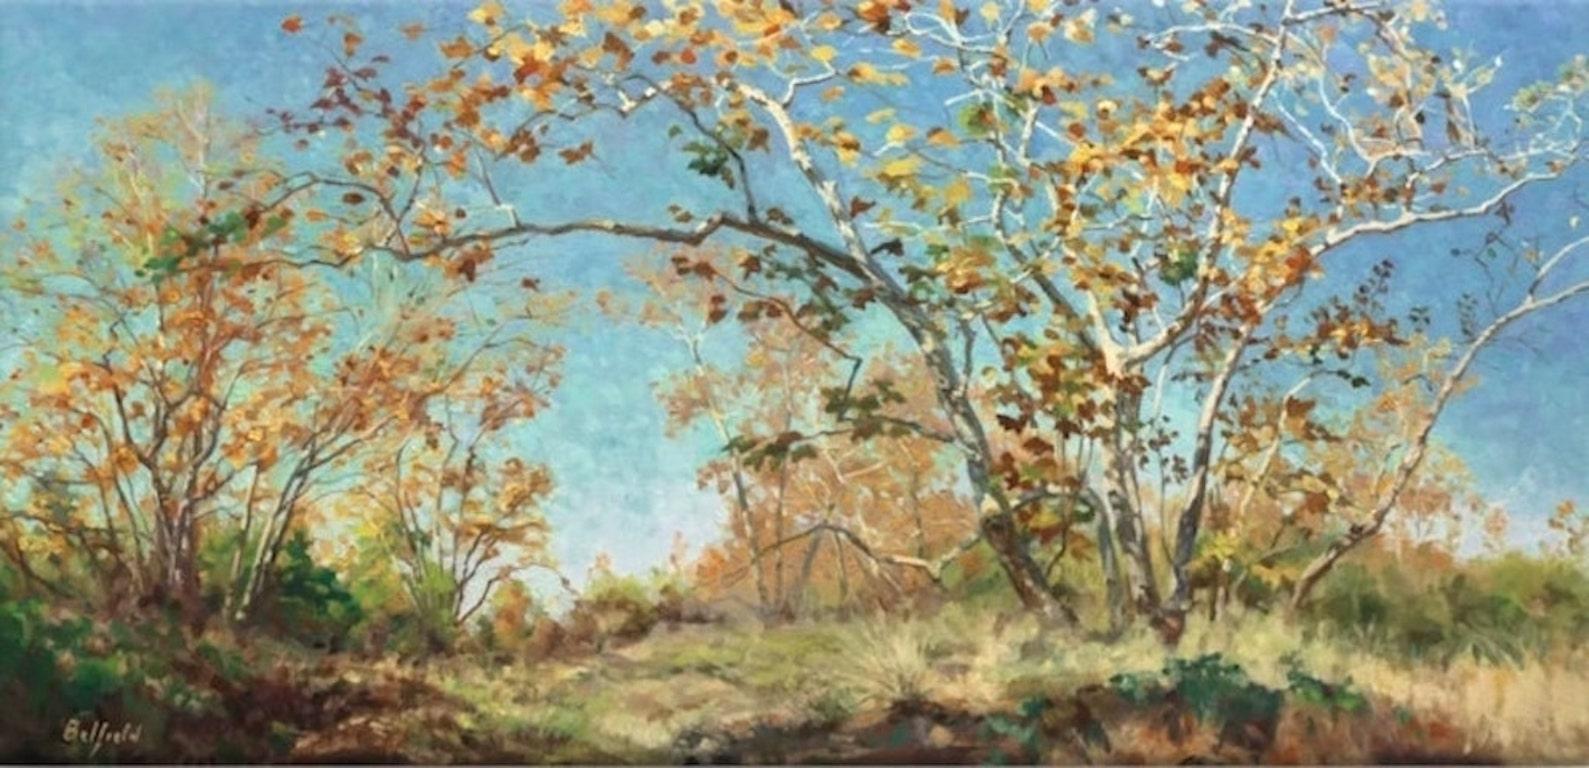 Brian Belfield  Landscape Painting - Impressionist Landscape, "Forever Autumn"